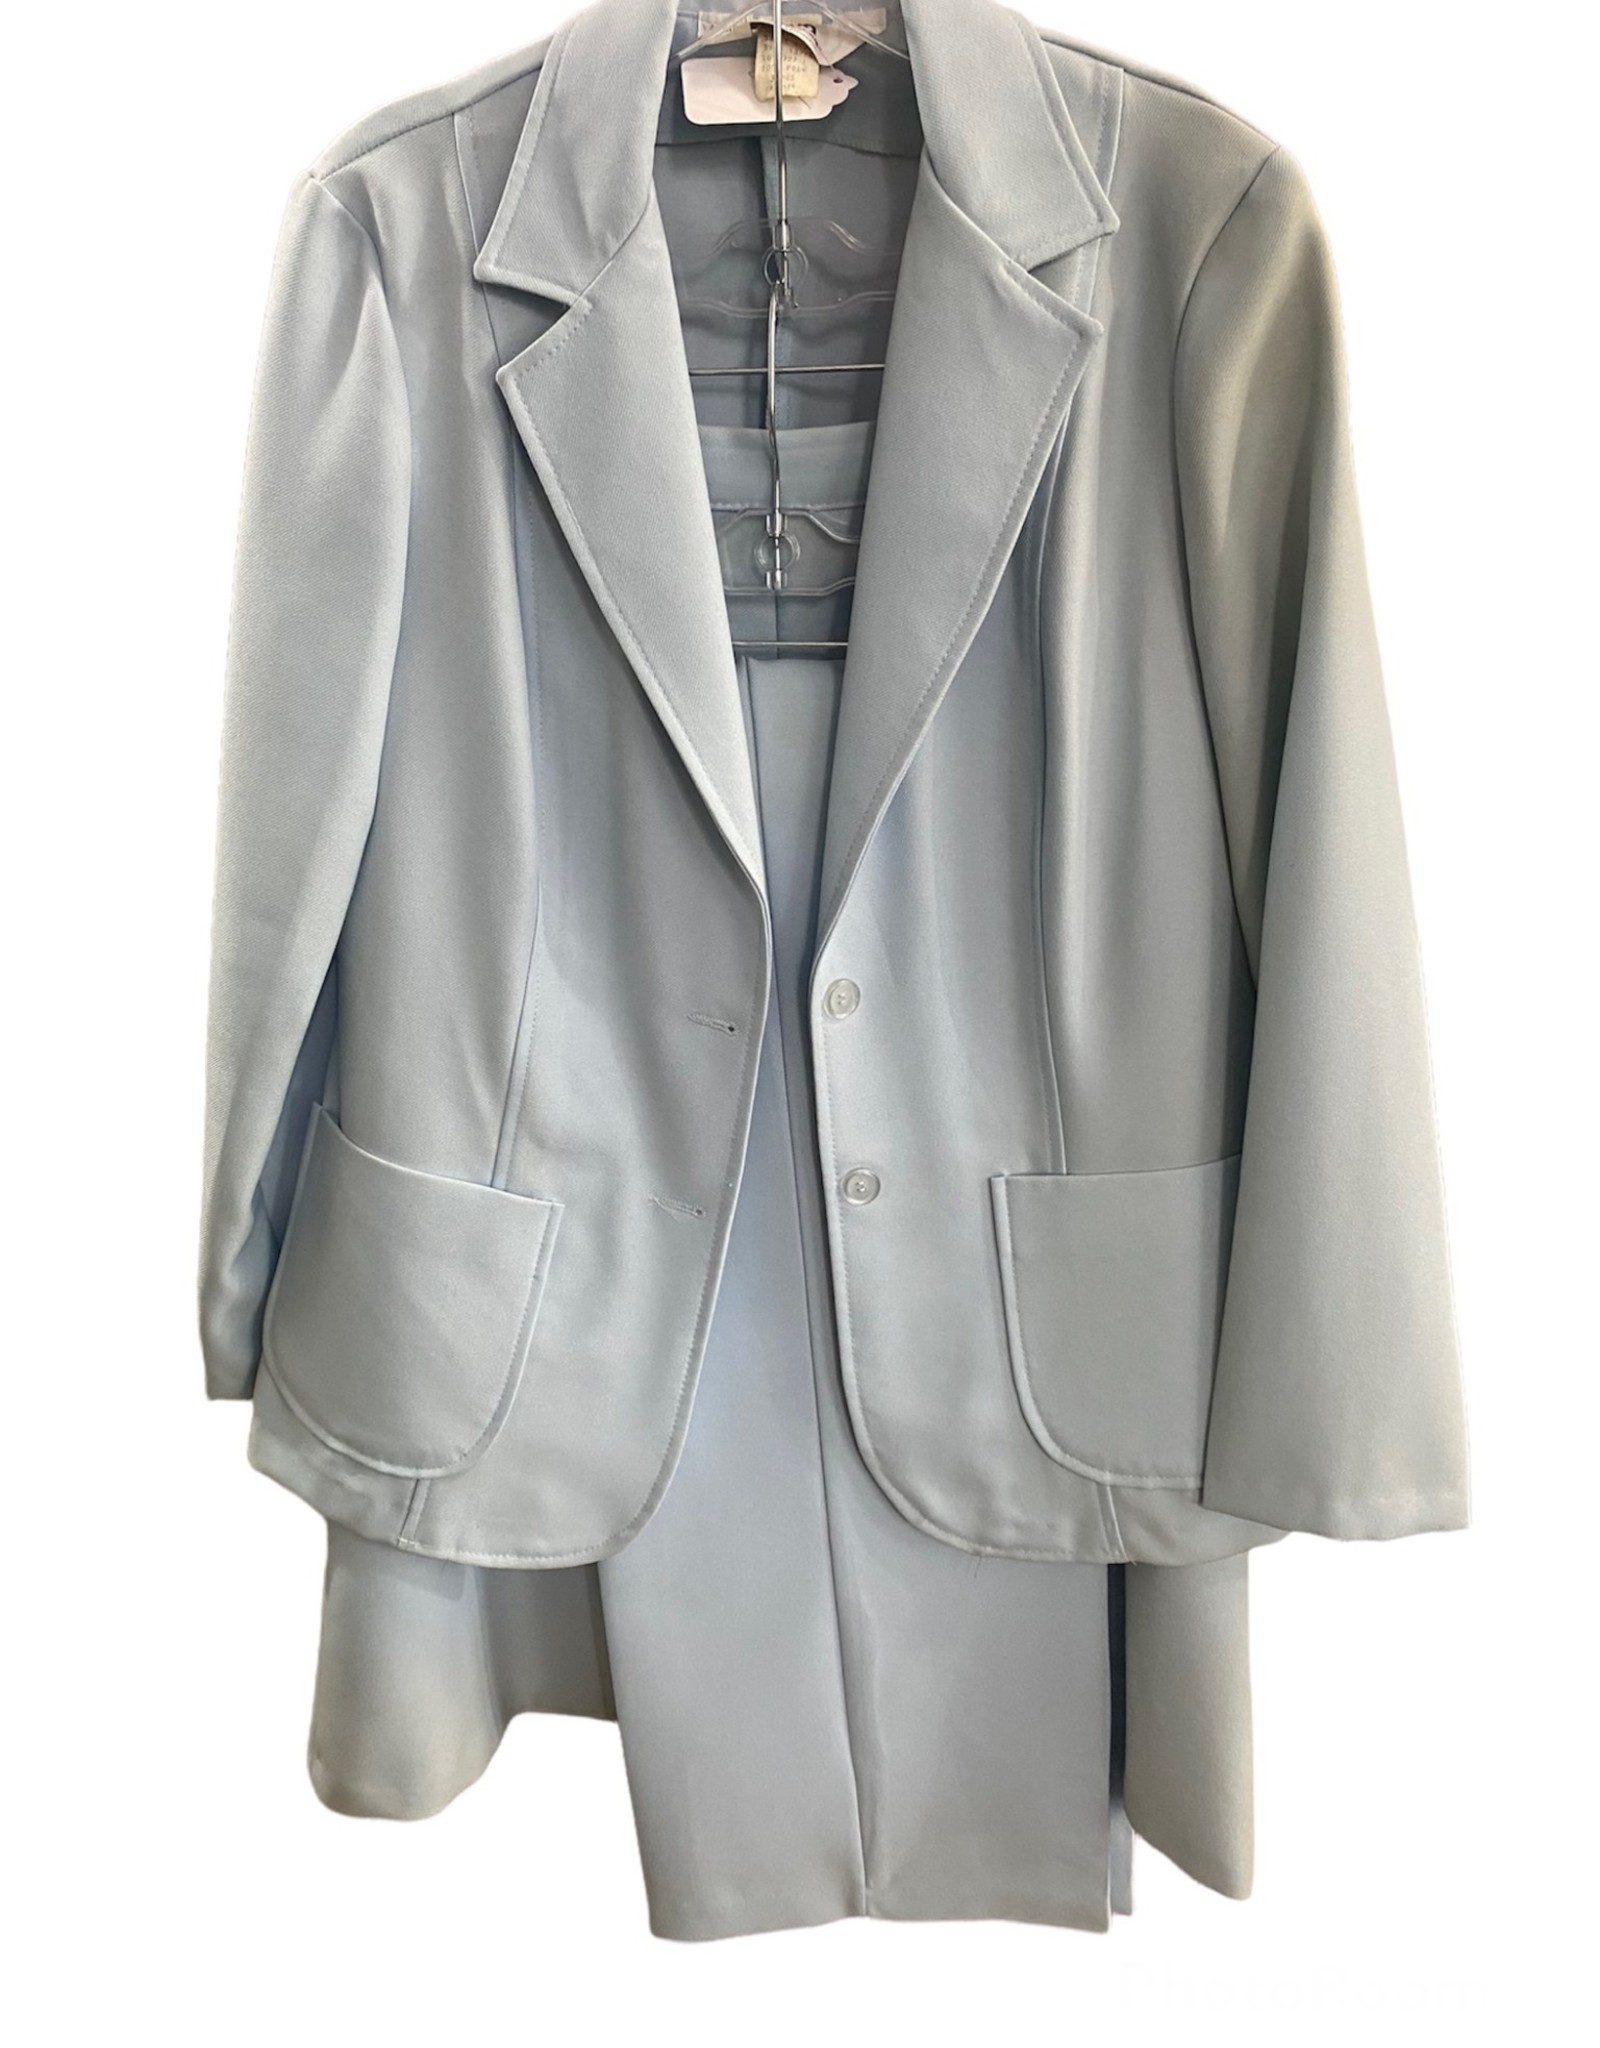 Montgomery Ward 70s Teal Blue 3 Piece pant/Skirt Suit set